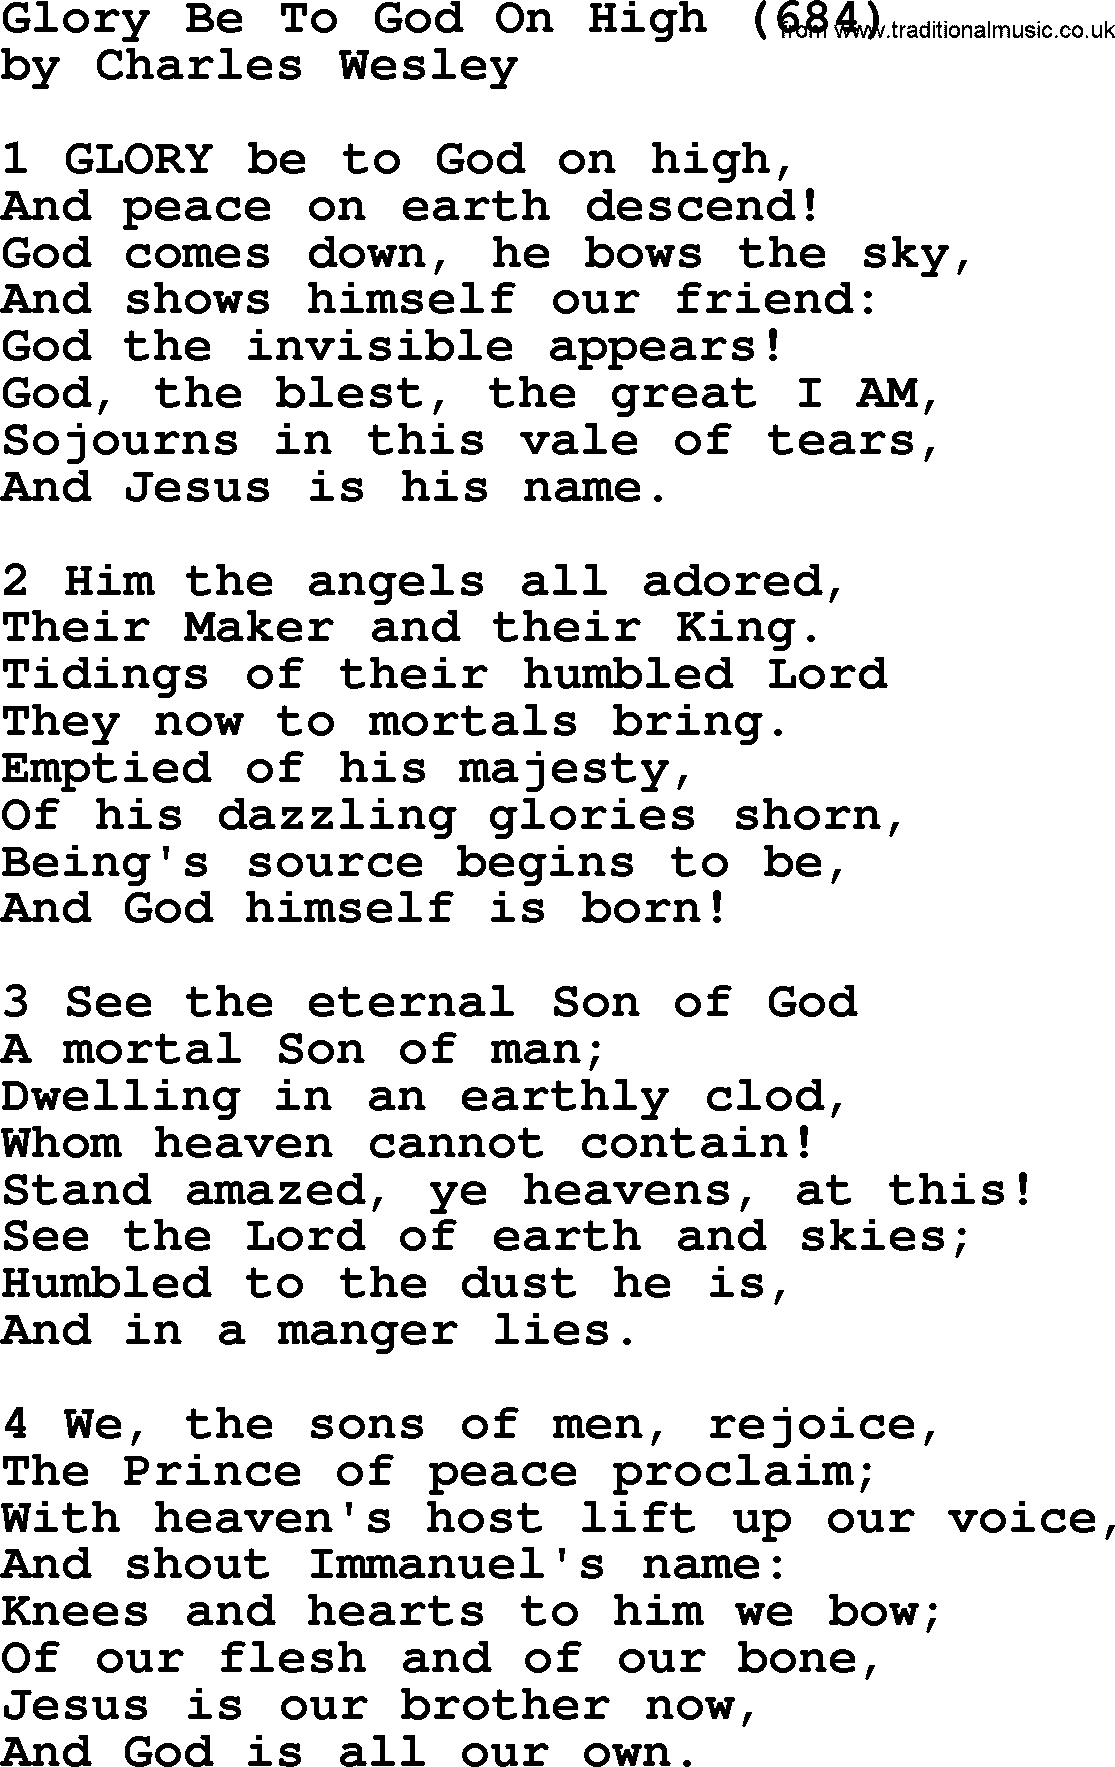 Charles Wesley hymn: Glory Be To God On High (684), lyrics